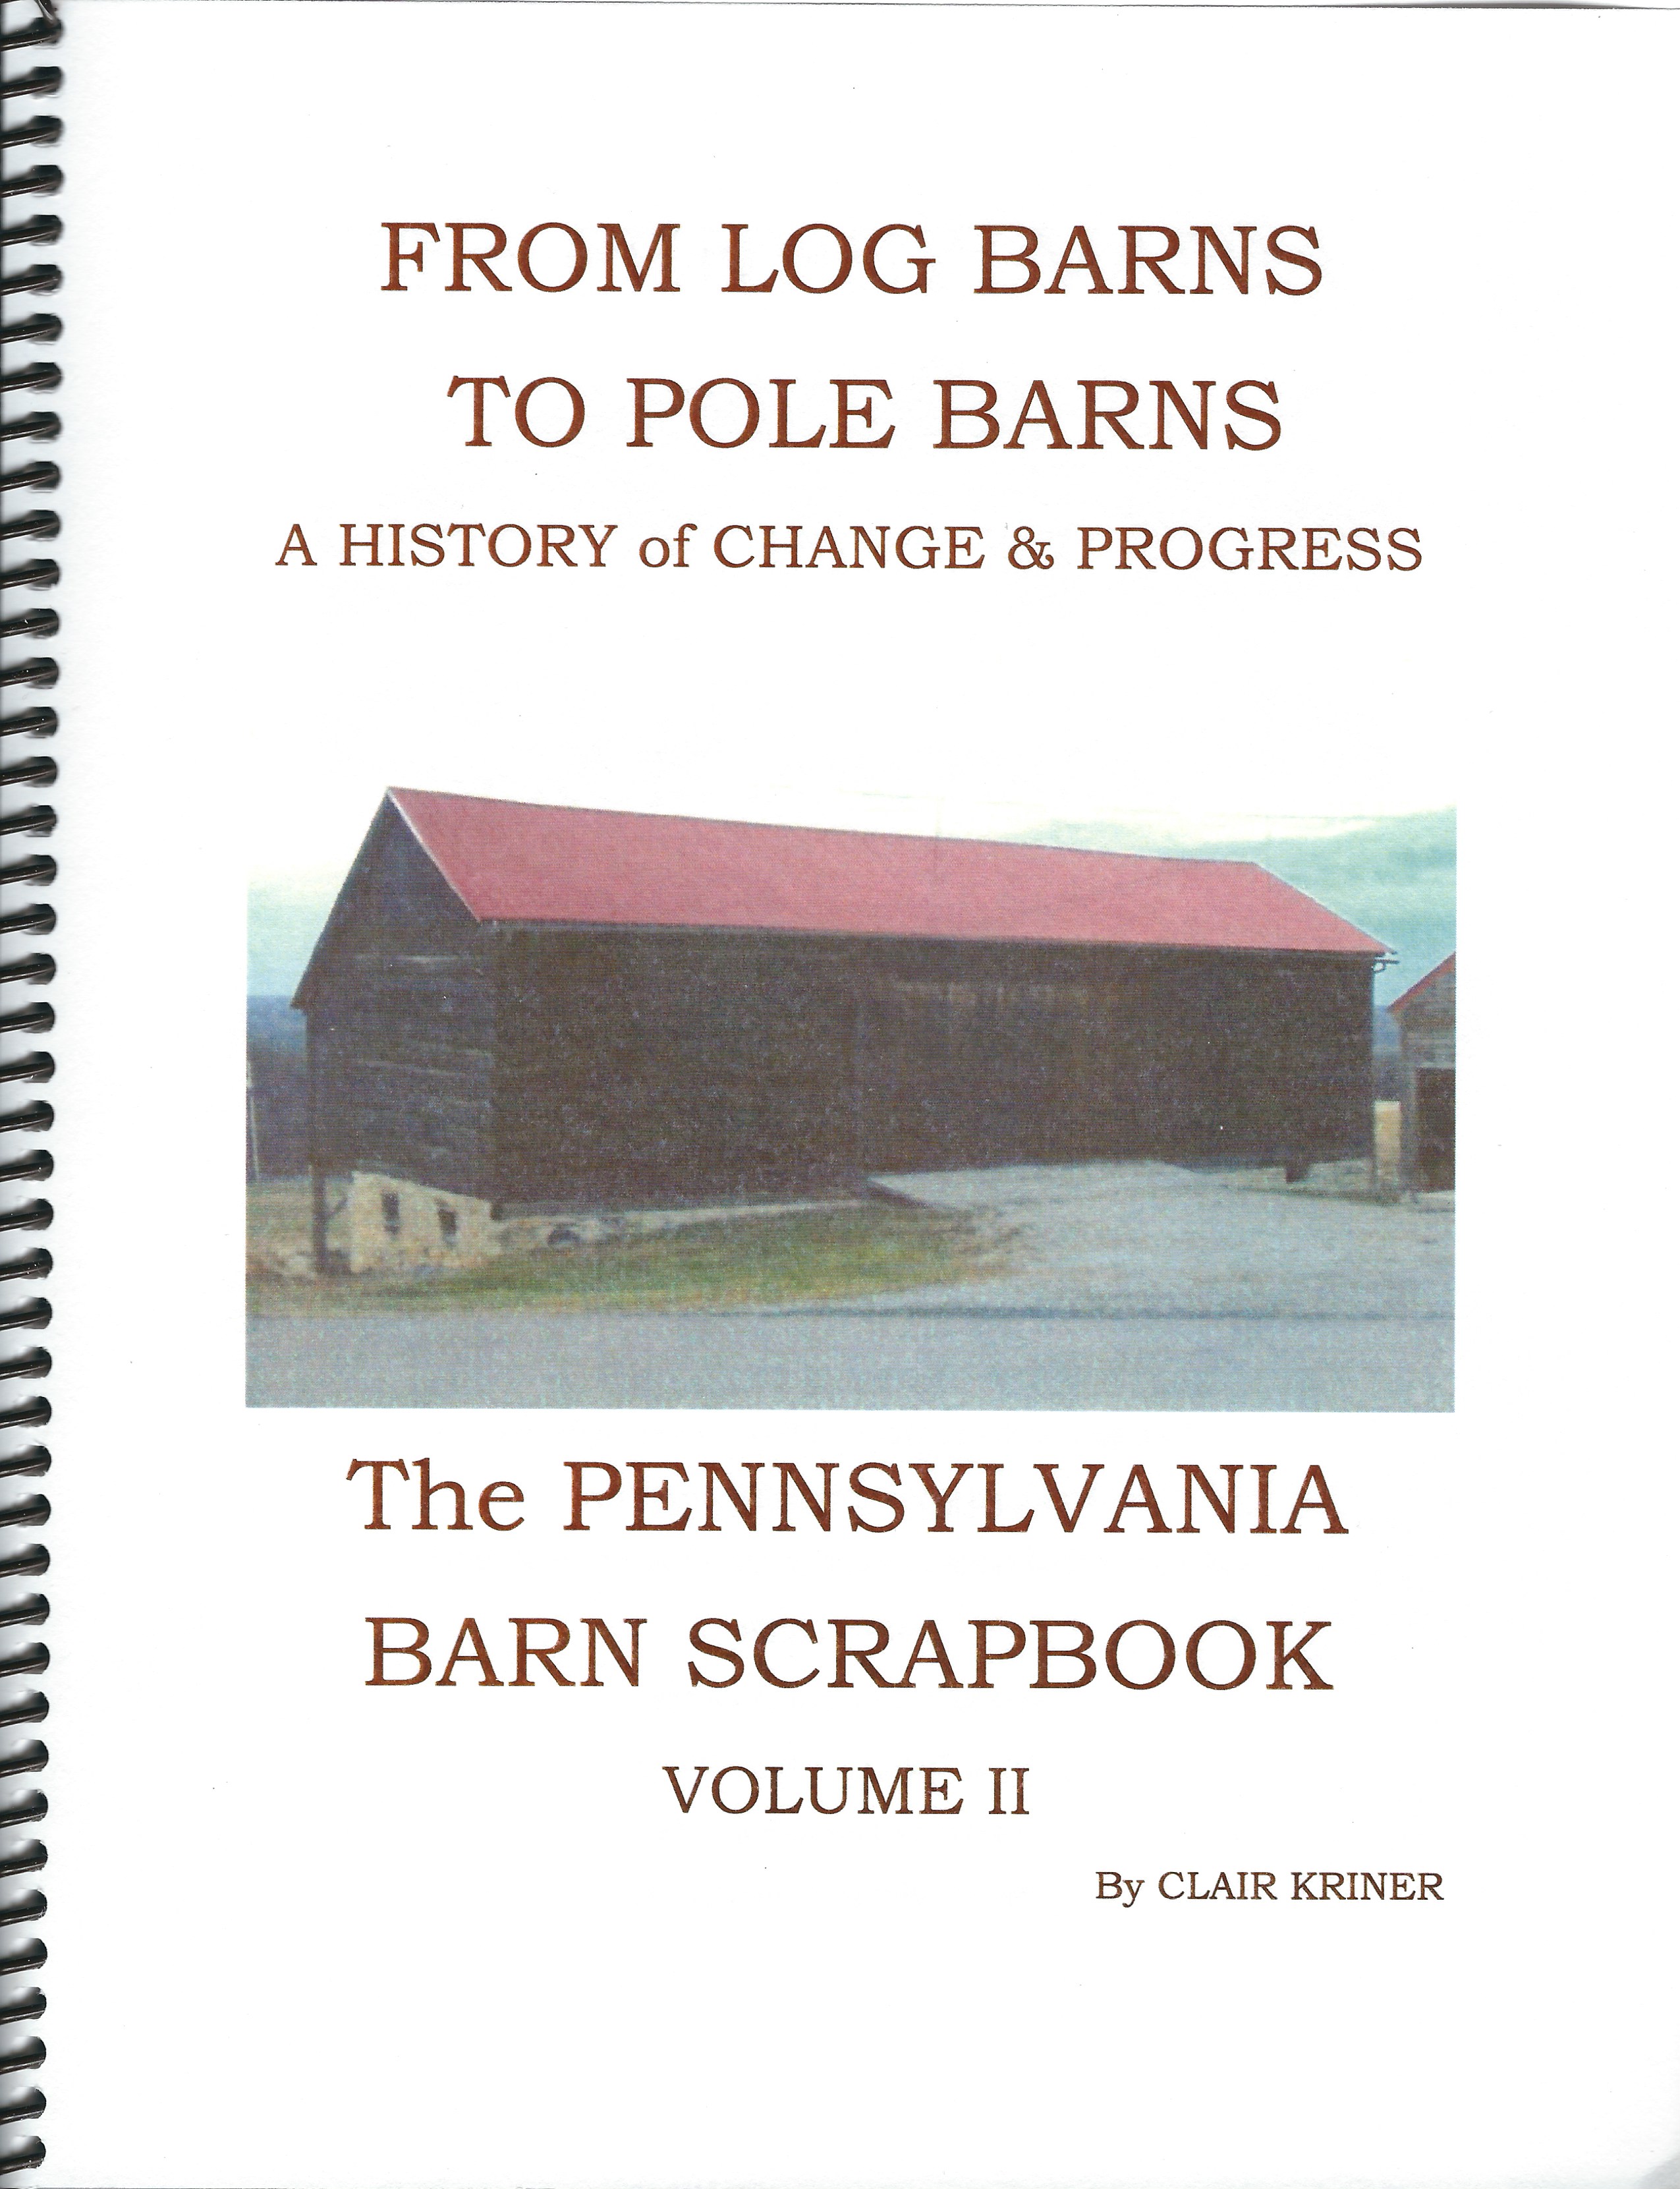 The Pennsylvania Barn Scrapbook - From Log Barns to Pole Barns